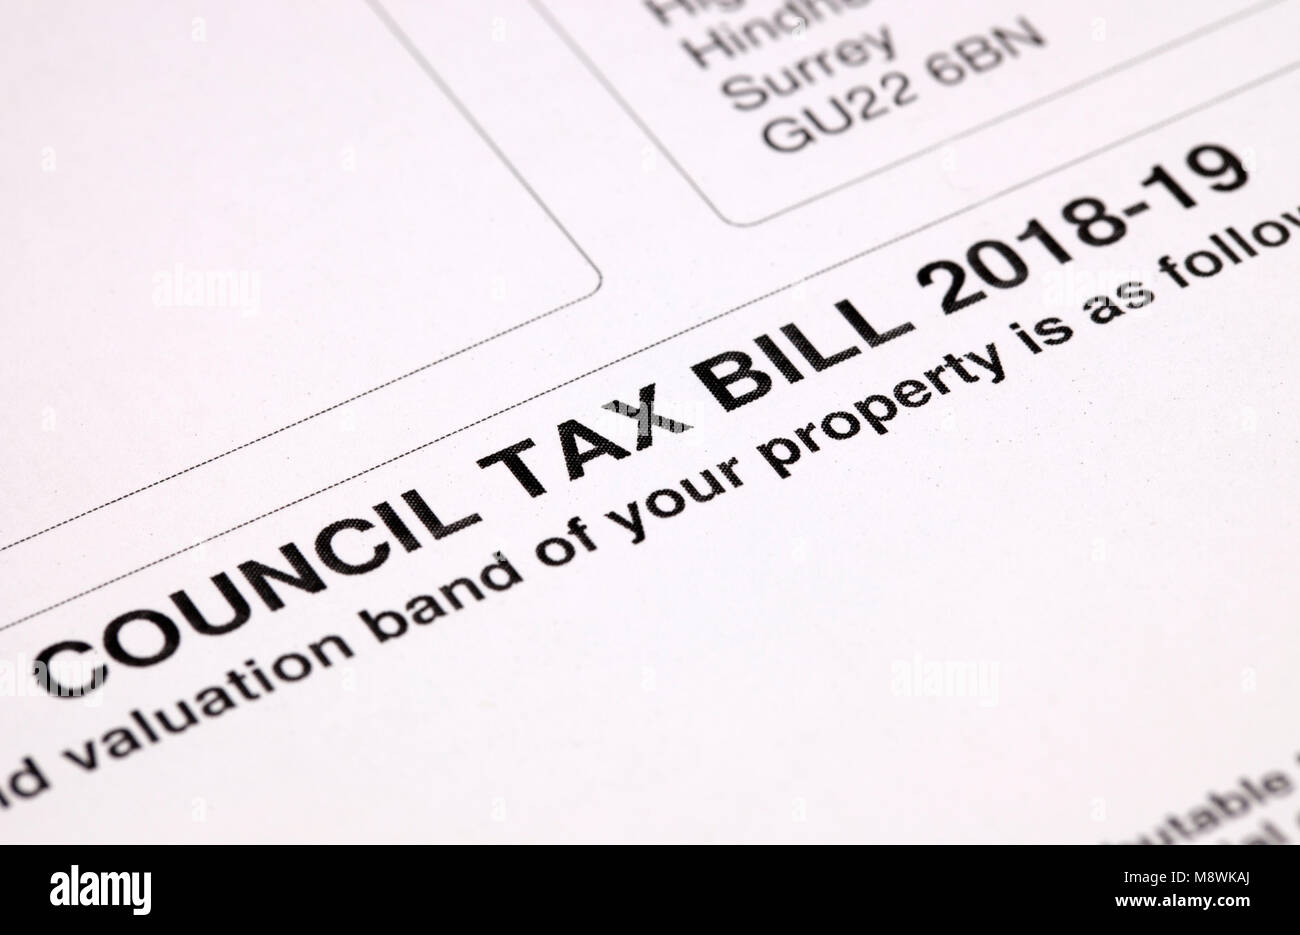 Council Tax Bill 2018-2019 Stock Photo